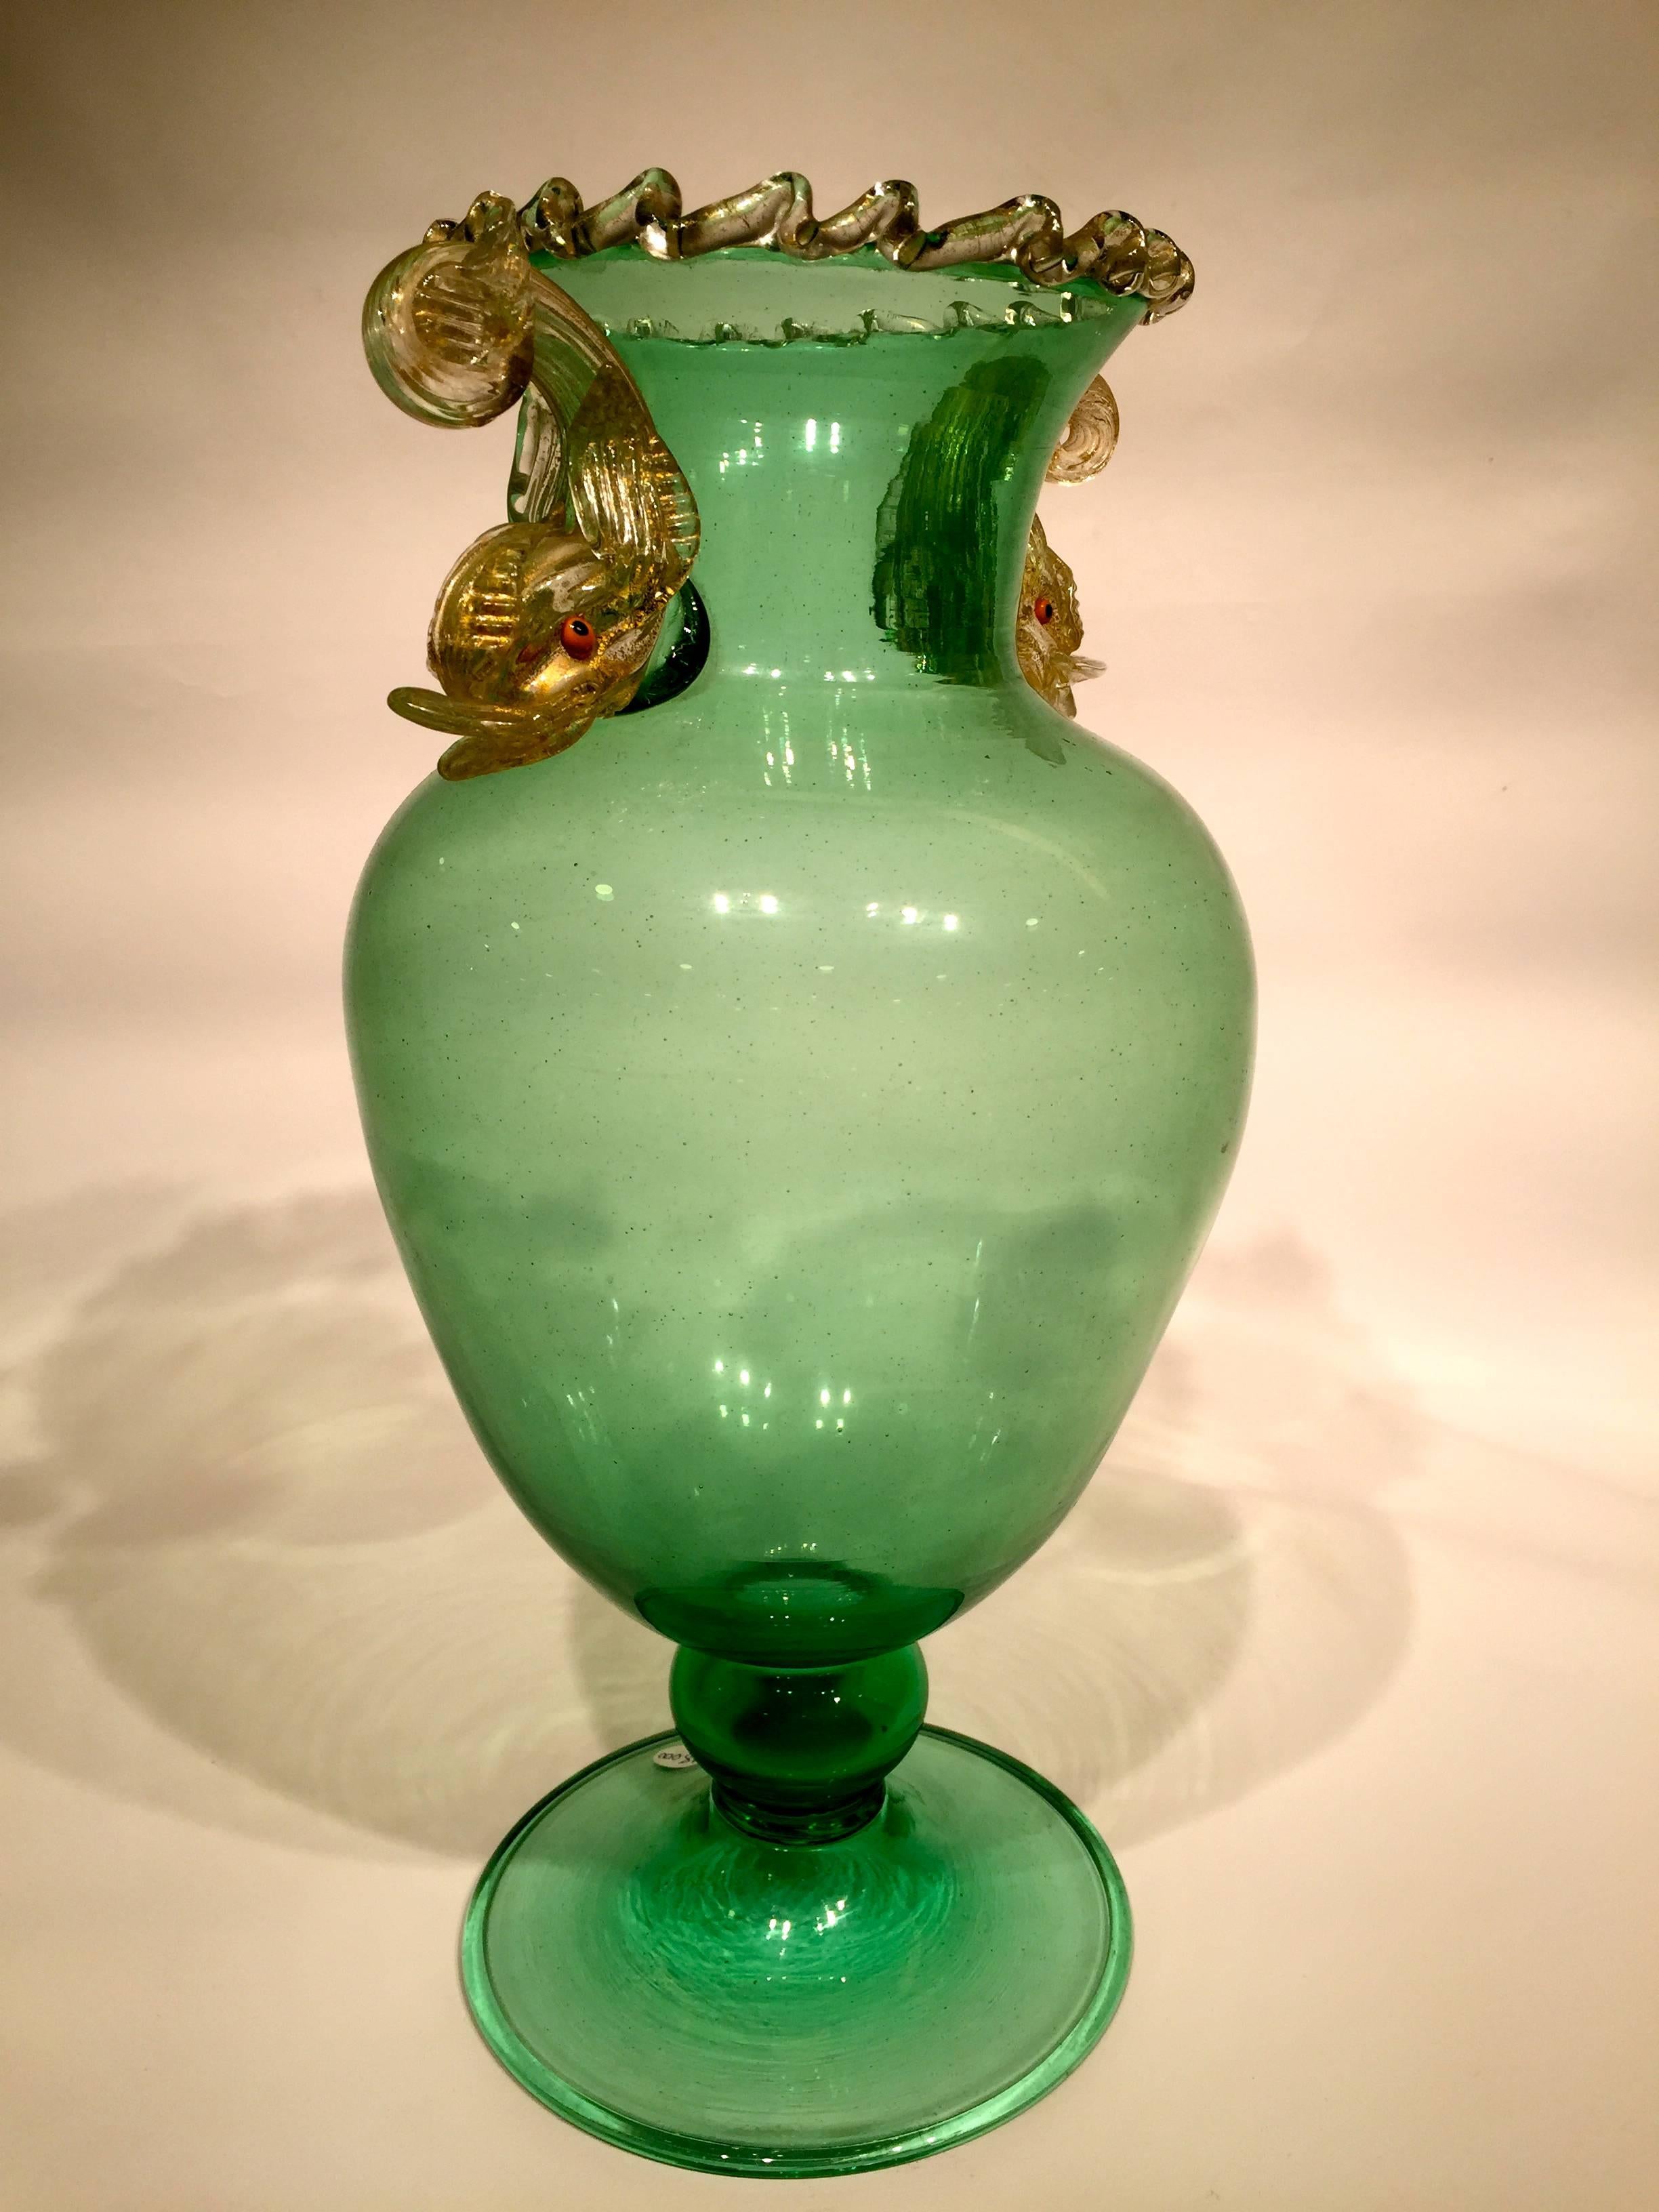 Salviati Murano glass dolphins green and gold vase, circa 1940.